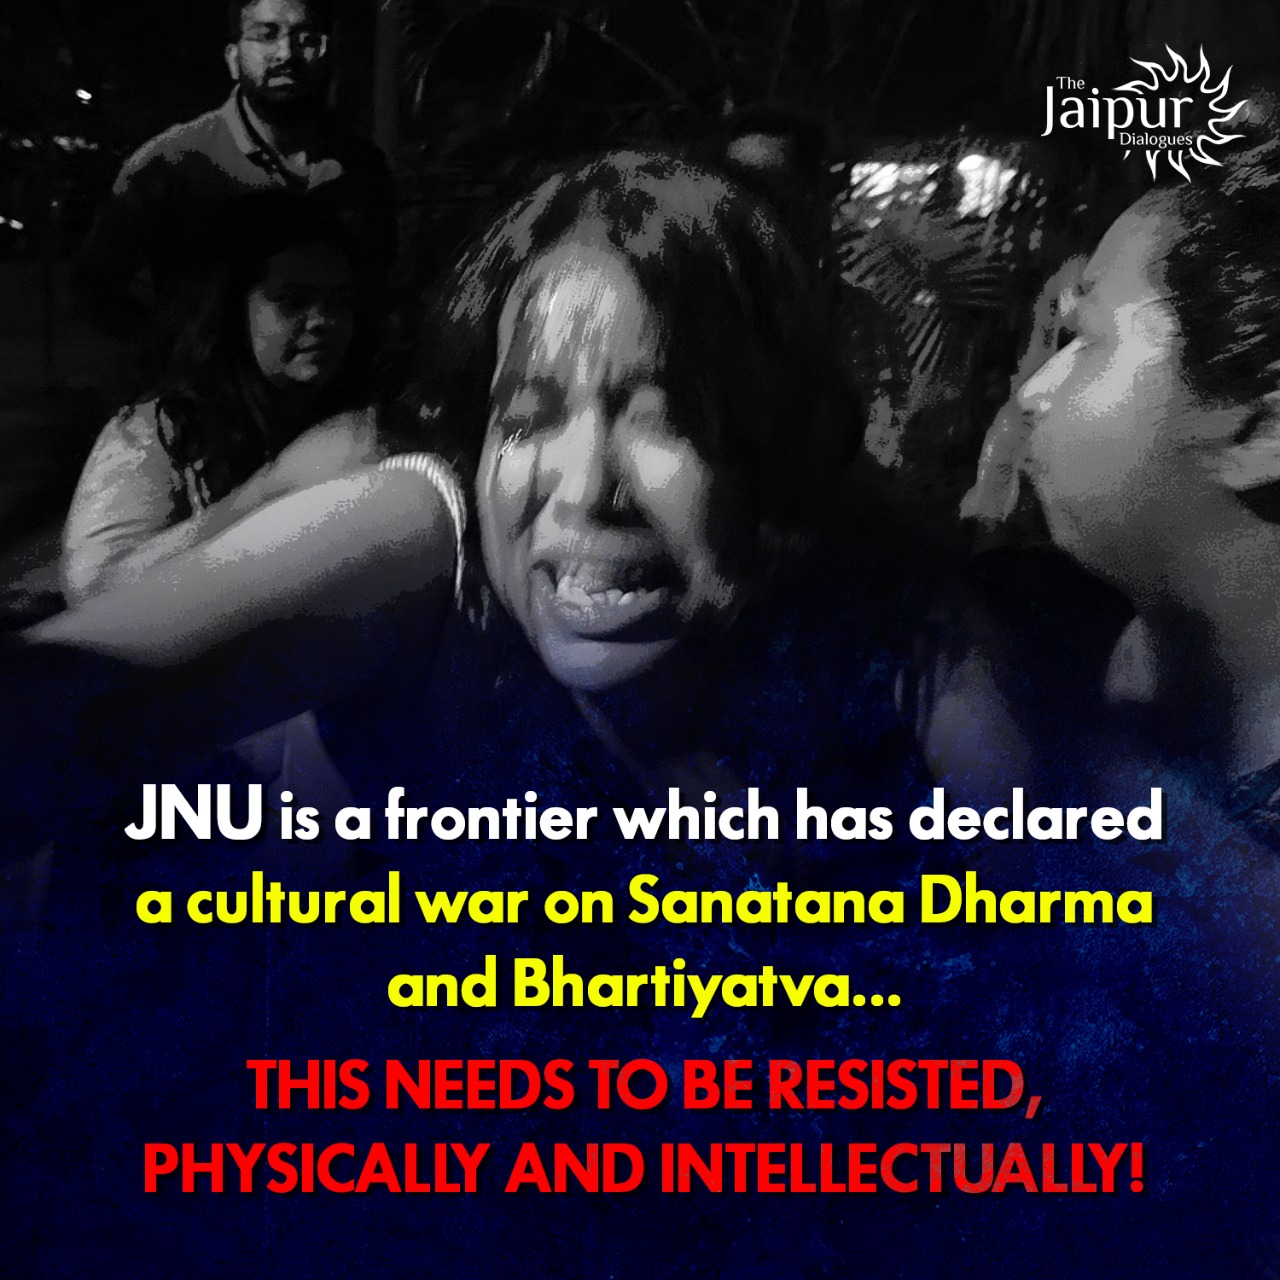 JNU is a Cultural Frontier.